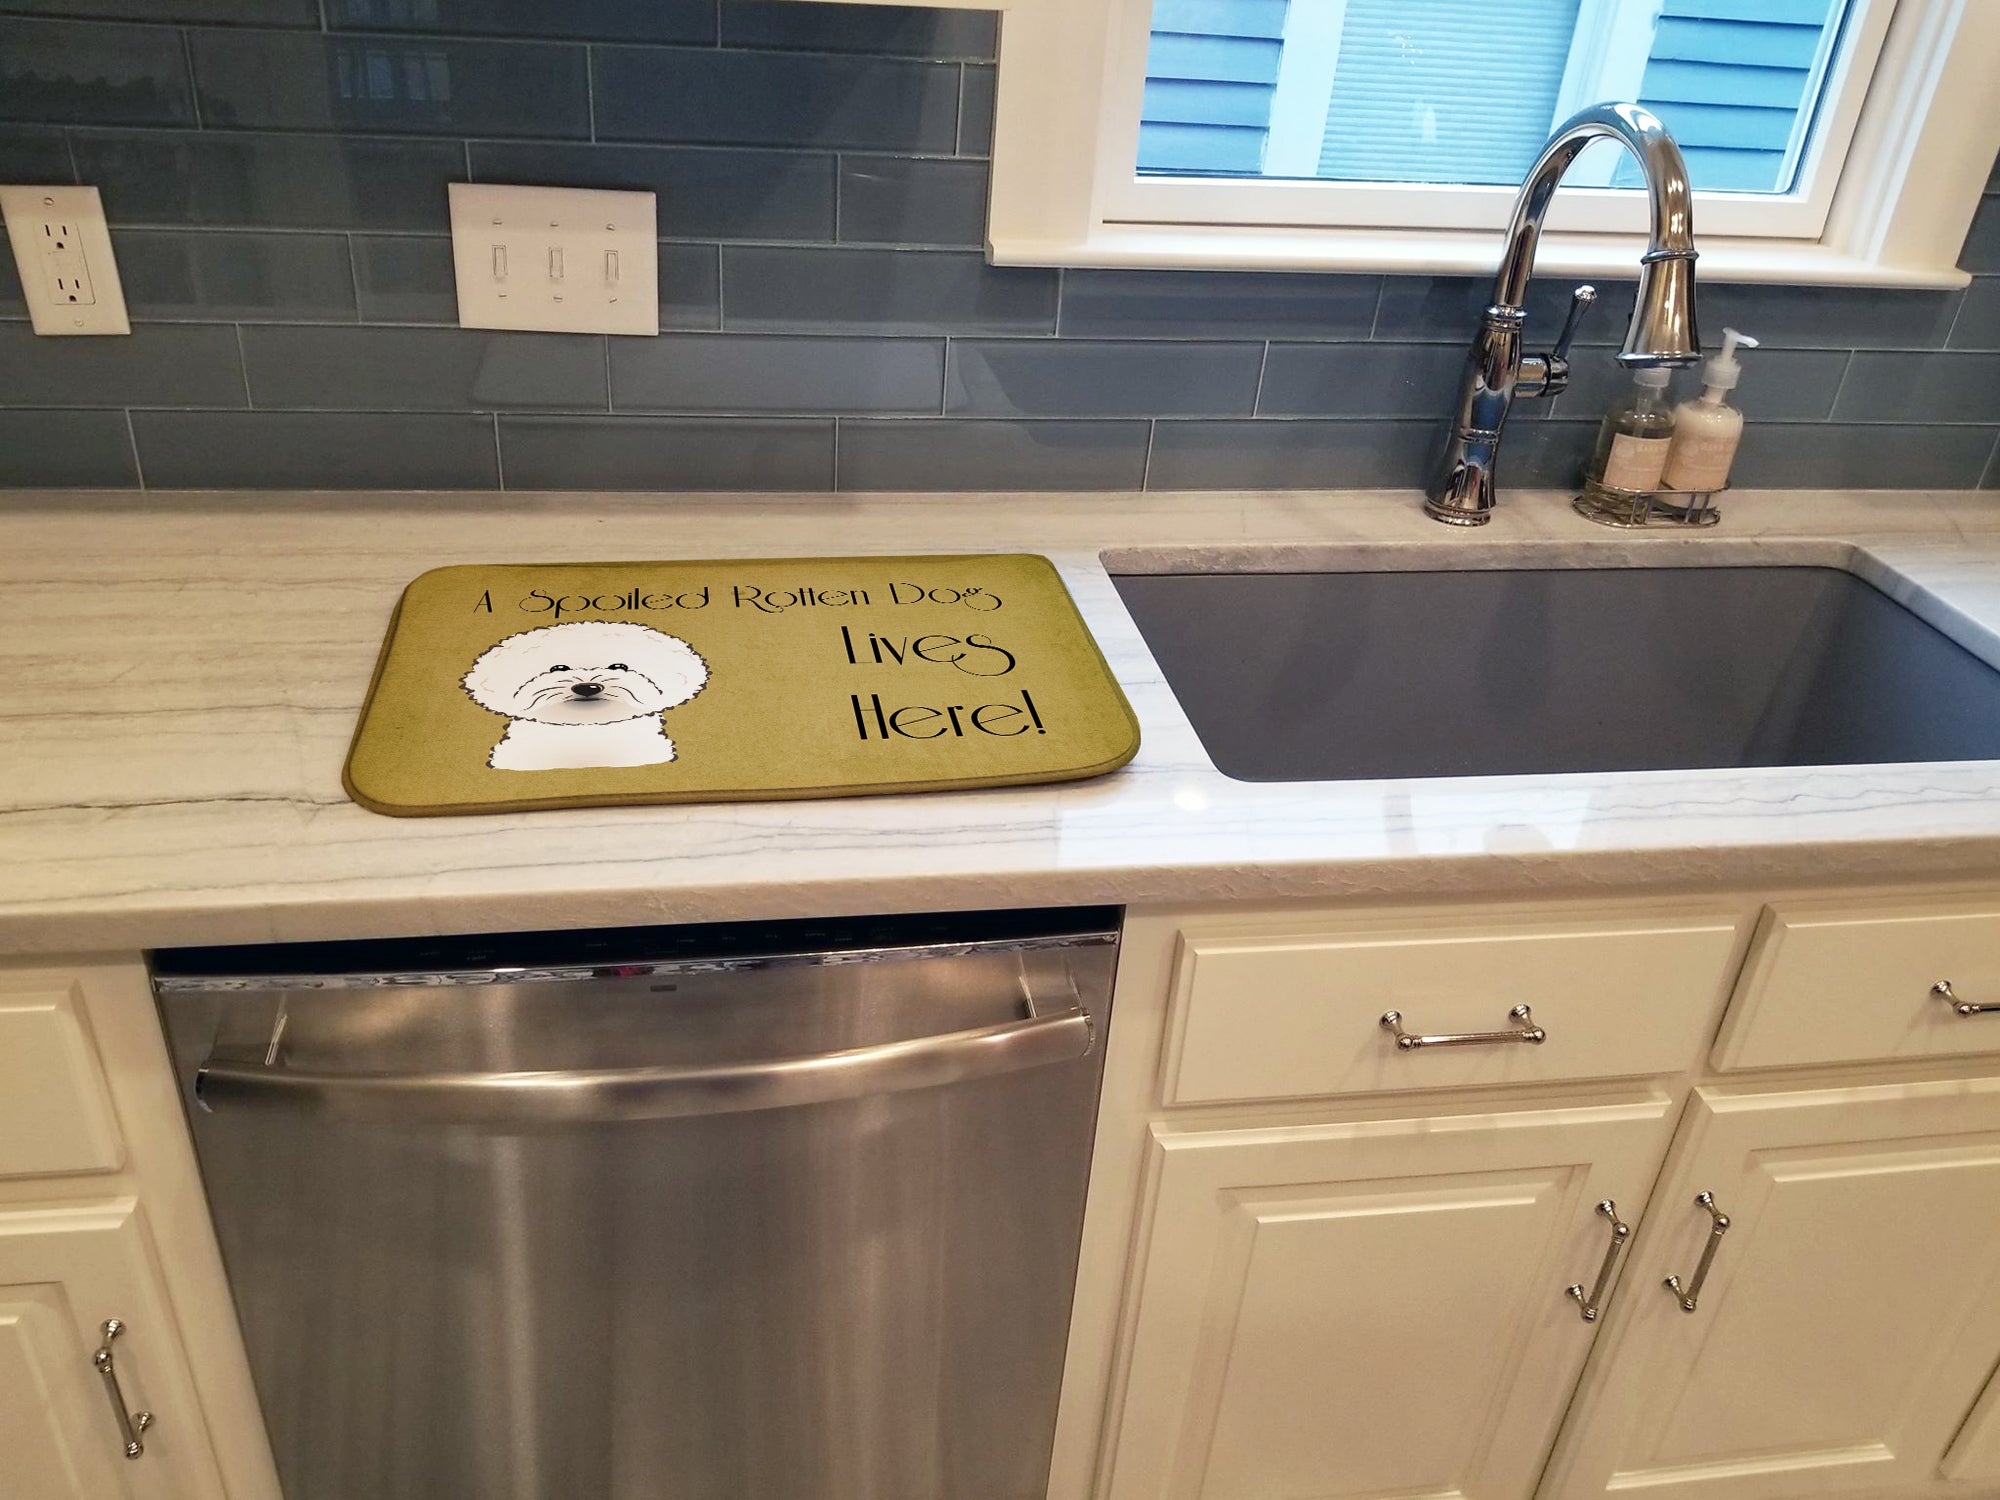 Bichon Frise Spoiled Dog Lives Here Dish Drying Mat BB1465DDM